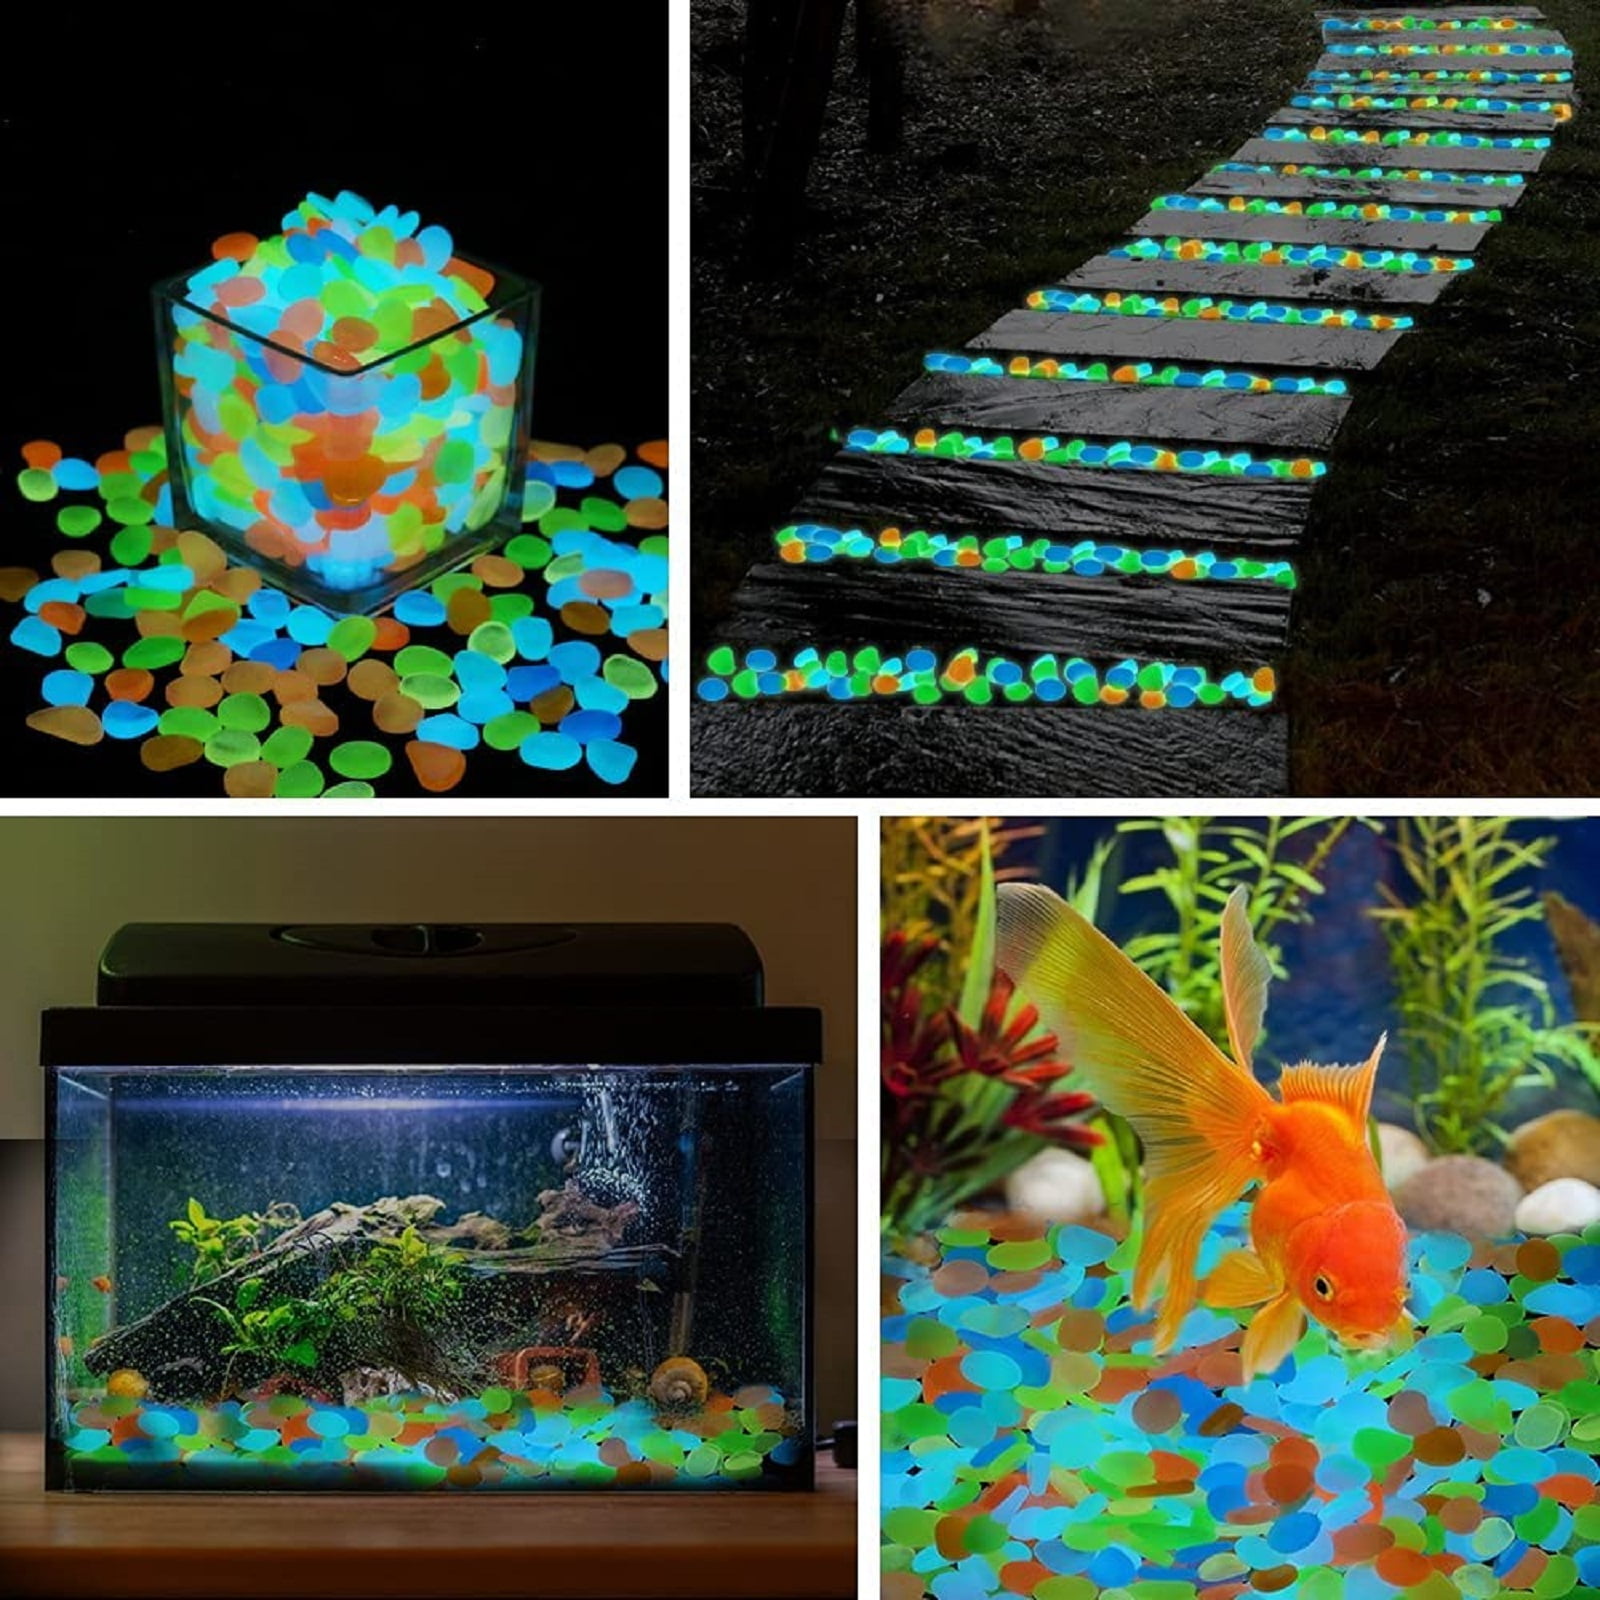 Colorful Aquarium Decorative Pebble Stones, SpringSmart Glow in The Dark Rocks for Garden, Yard, Fish Tank, Fish Bowl, Vase, Handmade Crafts